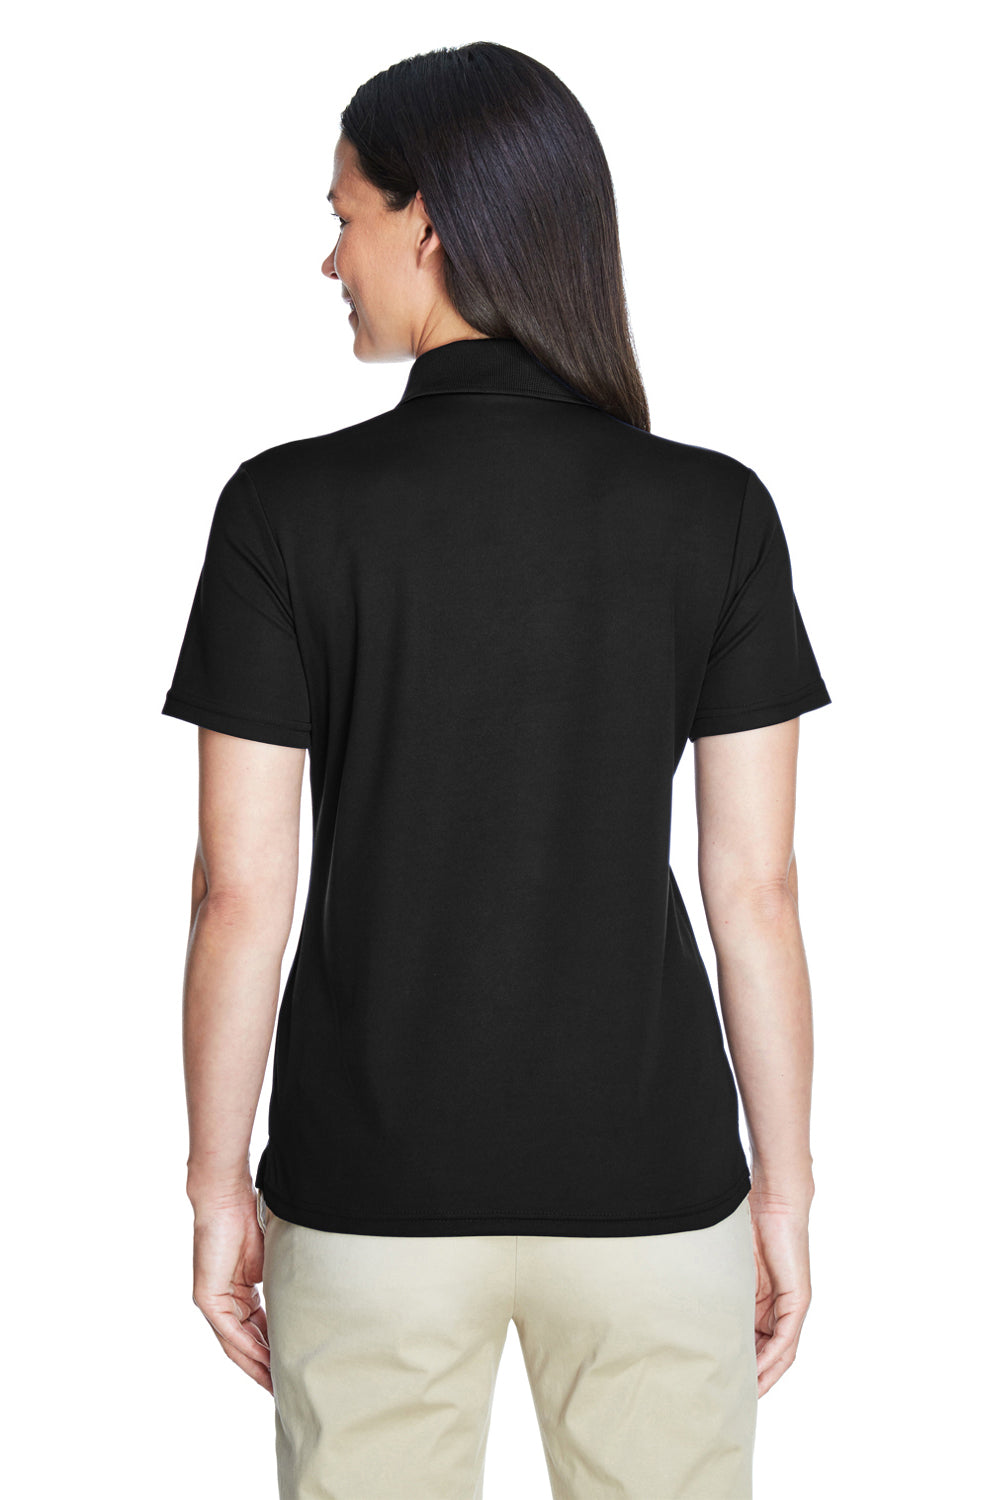 Core 365 78181 Womens Origin Performance Moisture Wicking Short Sleeve Polo Shirt Black Back